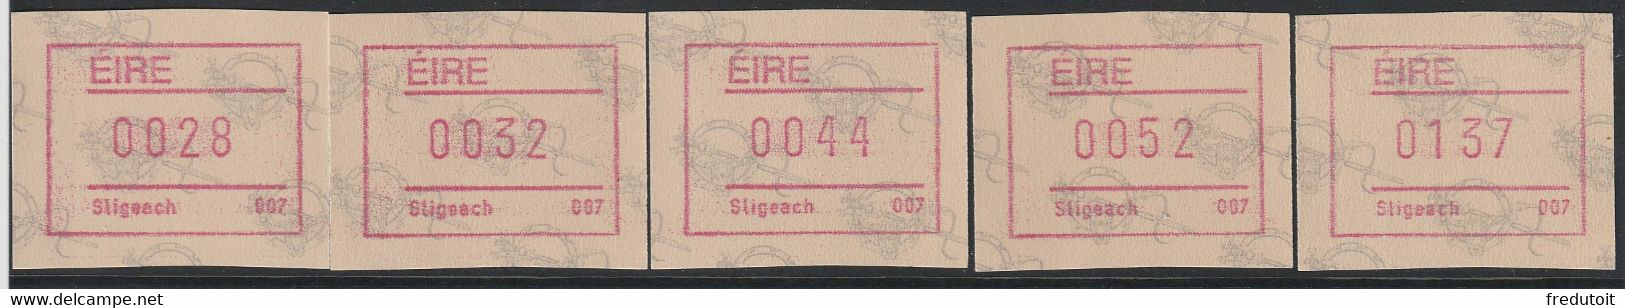 IRLANDE - Timbres Distributeurs / FRAMA  ATM - N°4** (1992) Sligeach 007 - Affrancature Meccaniche/Frama